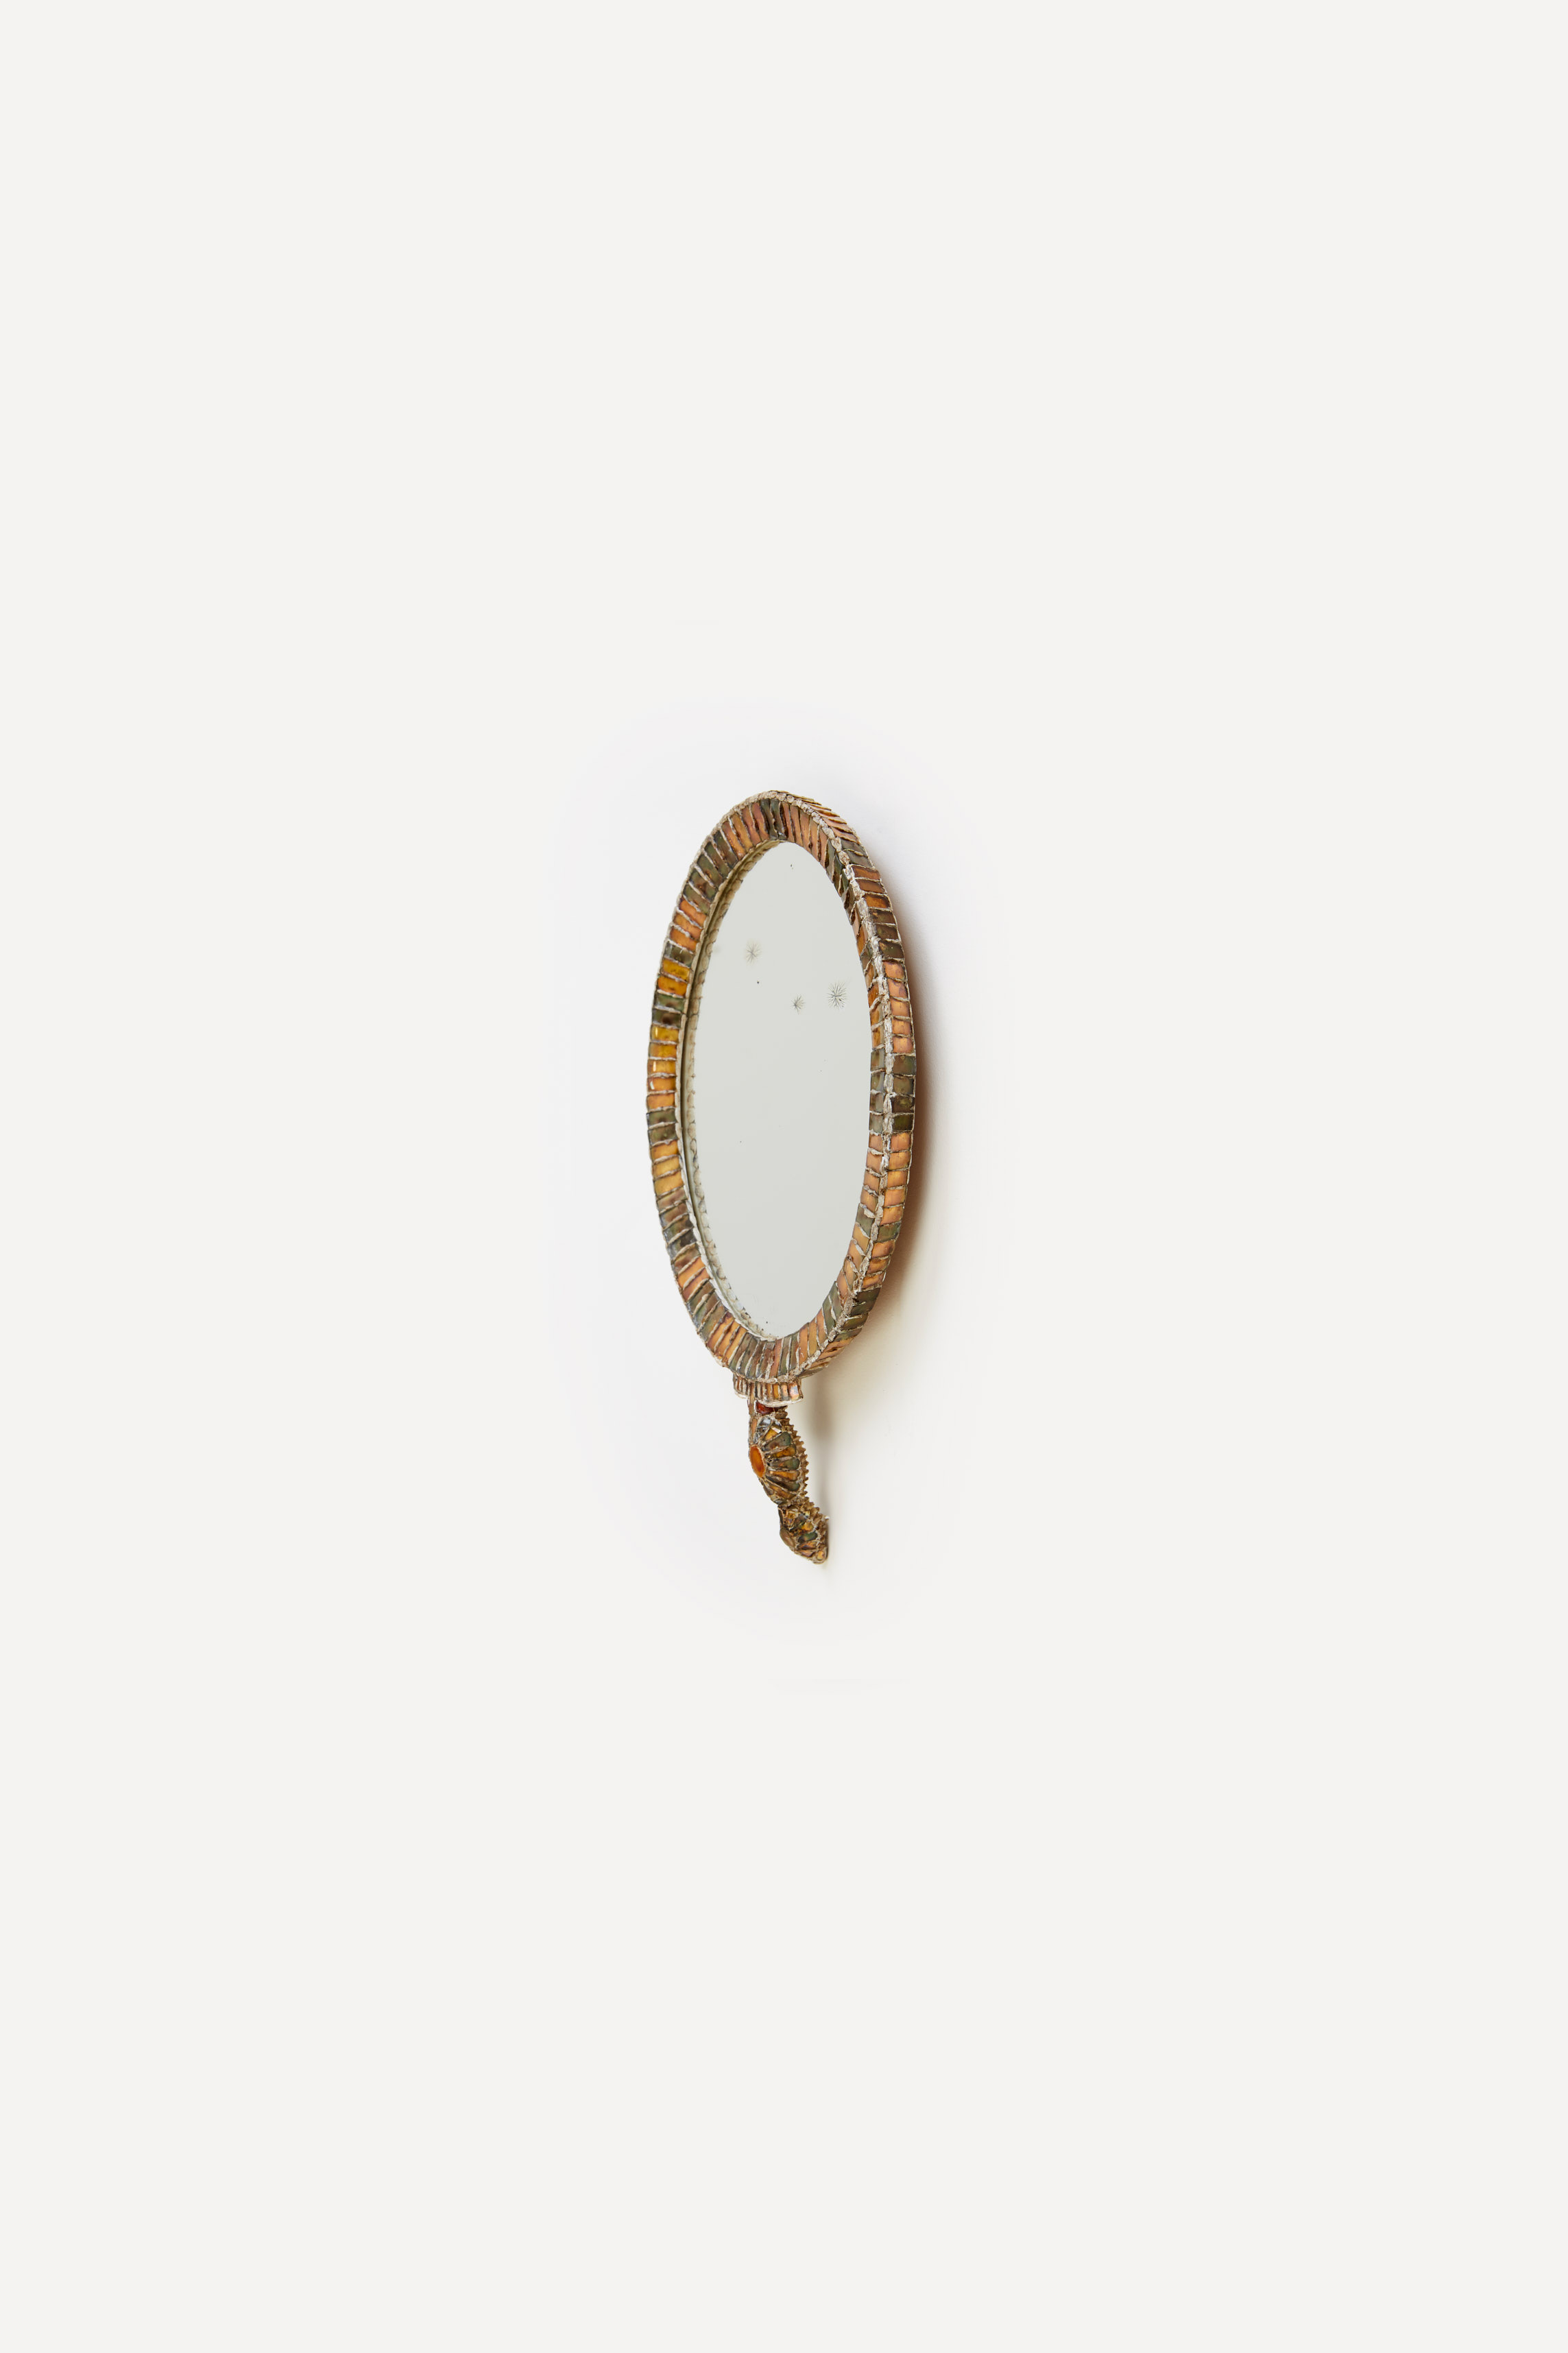 Line Vautrin, “Gabrielle” mirror, vue 01